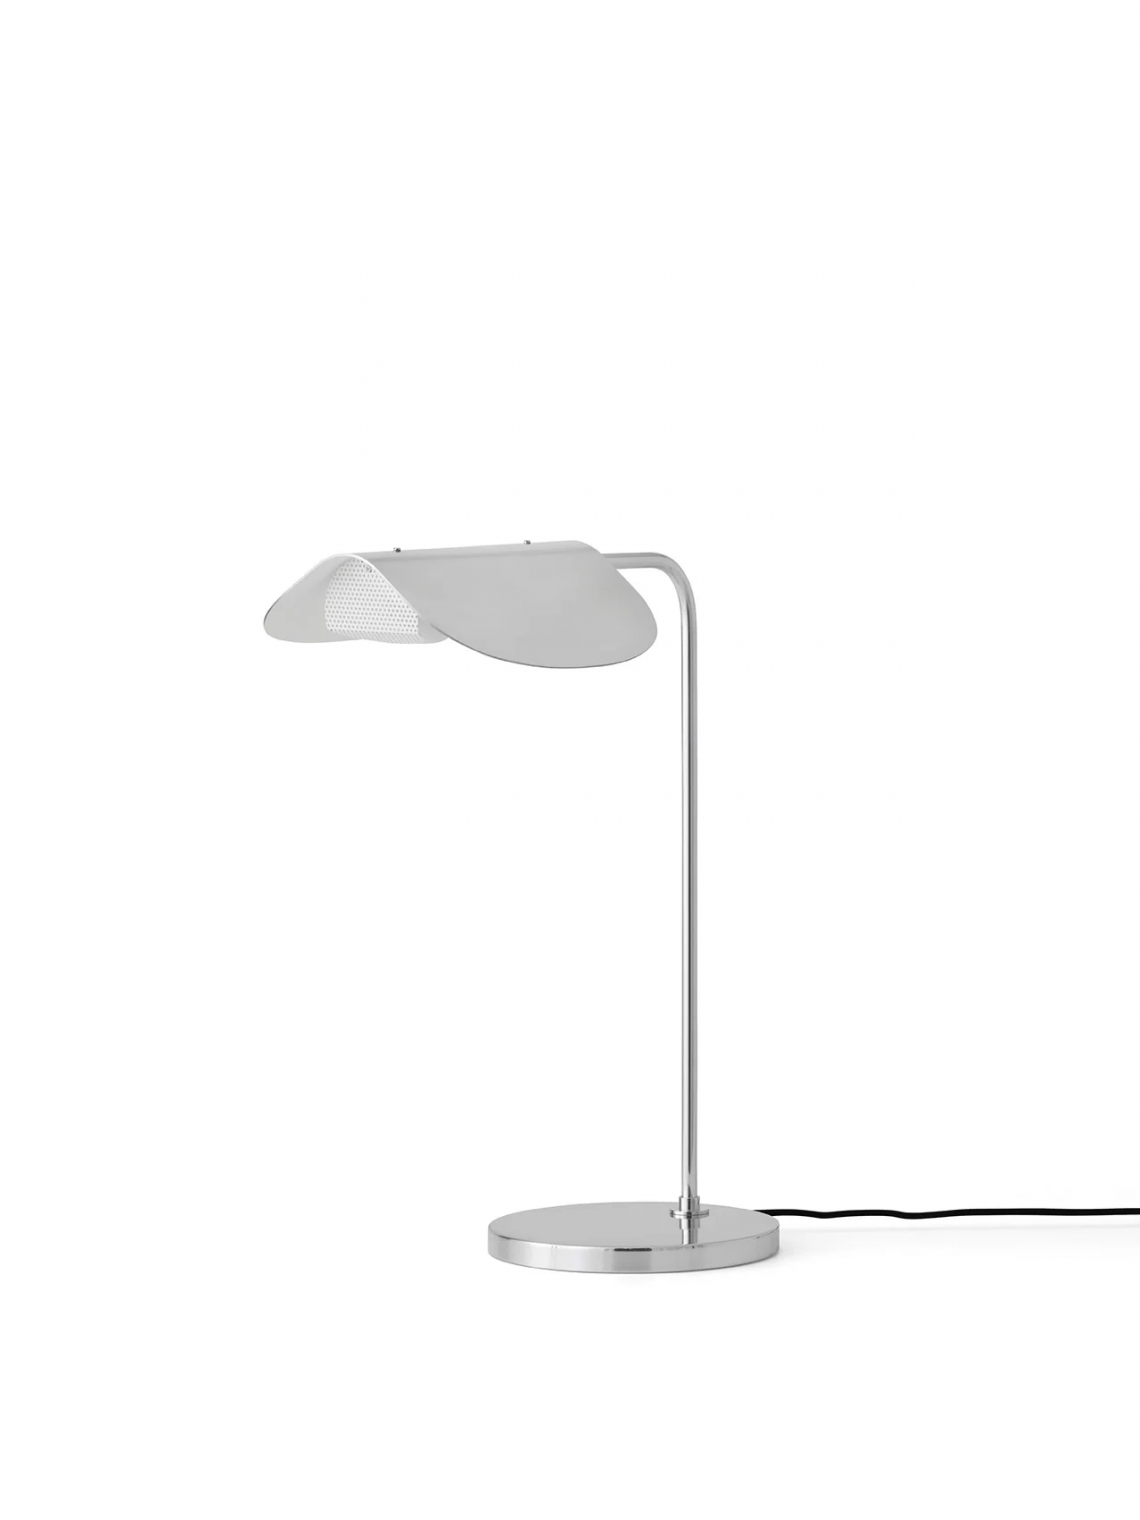 Wing Table Lamp台灯细节图2